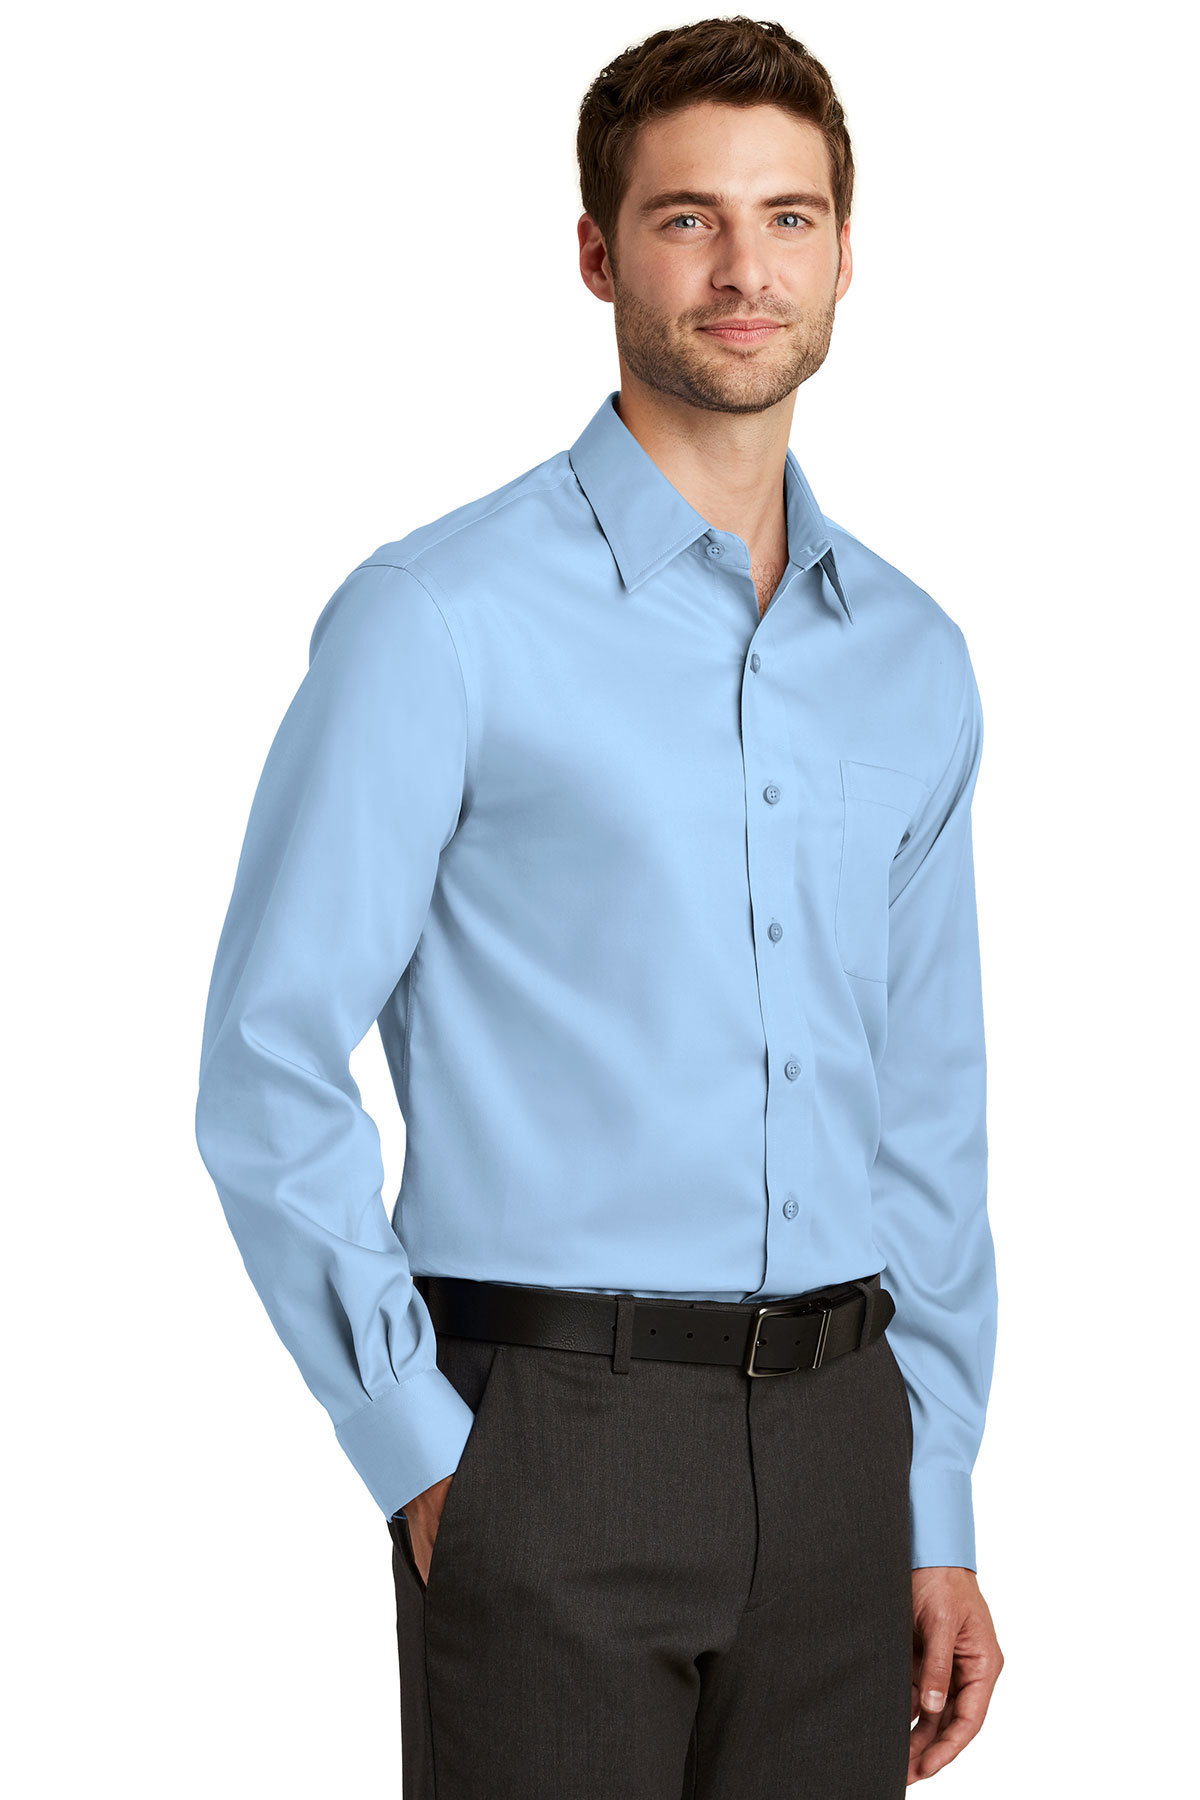 Port Authority Non-Iron Twill Shirt | Product | SanMar